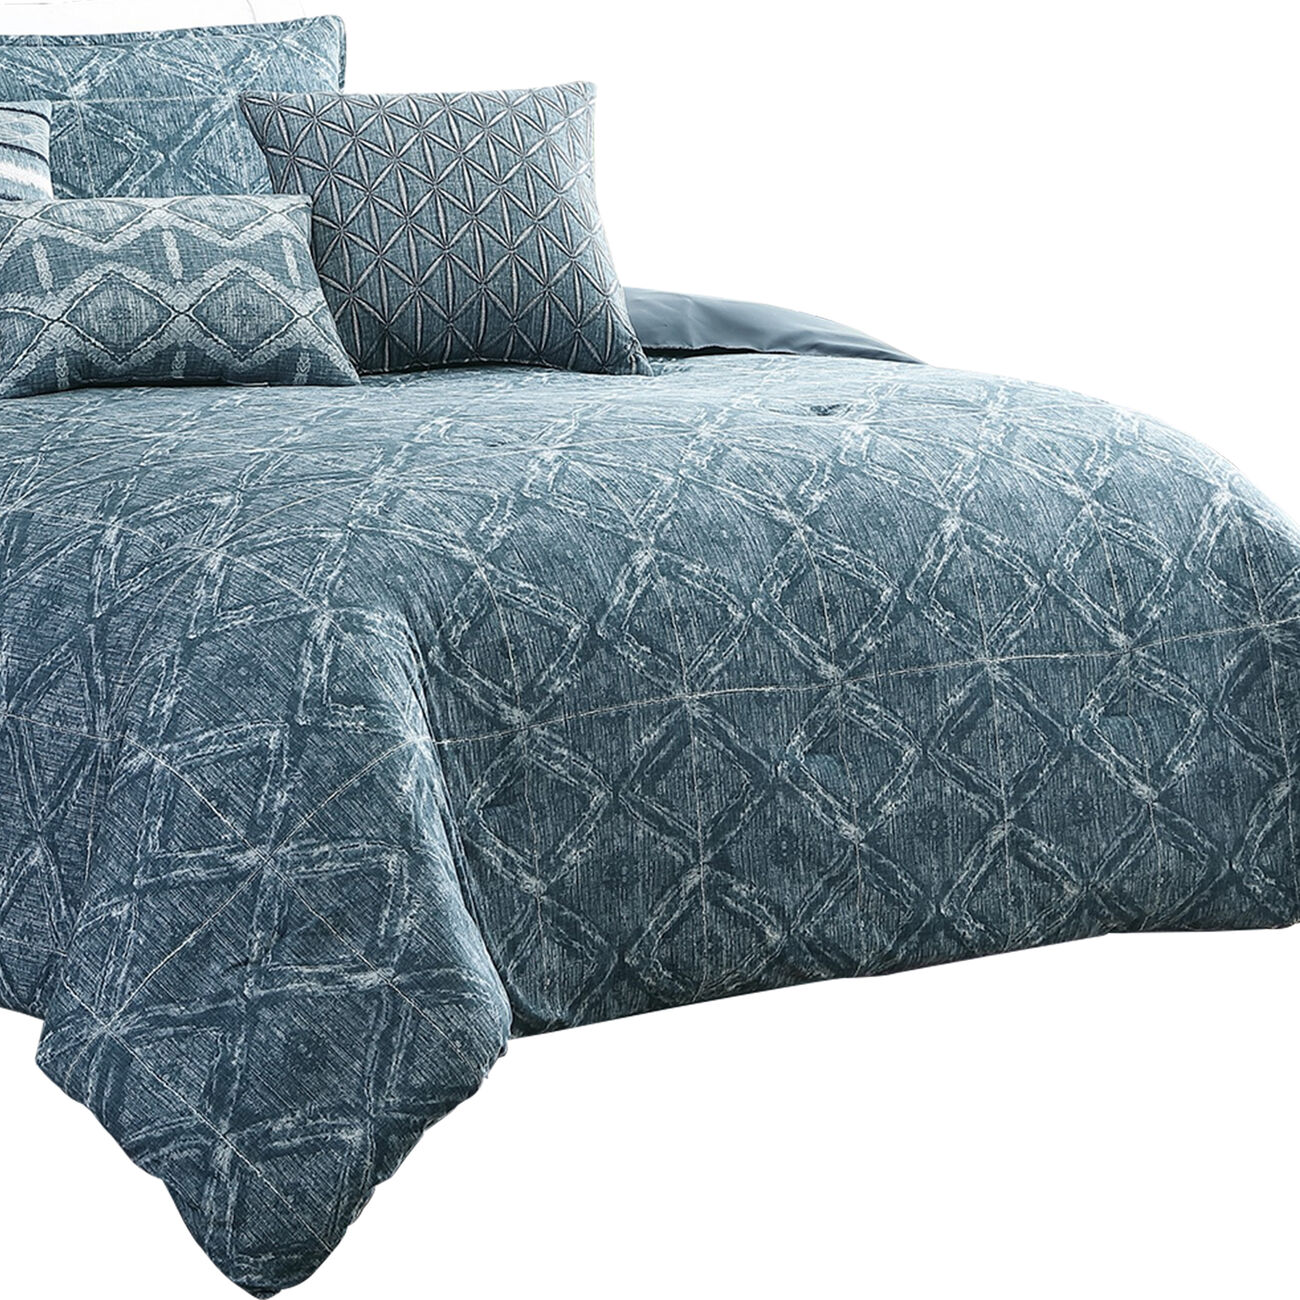 7 Piece Queen Size Cotton Comforter Set with Geometric Print, Blue